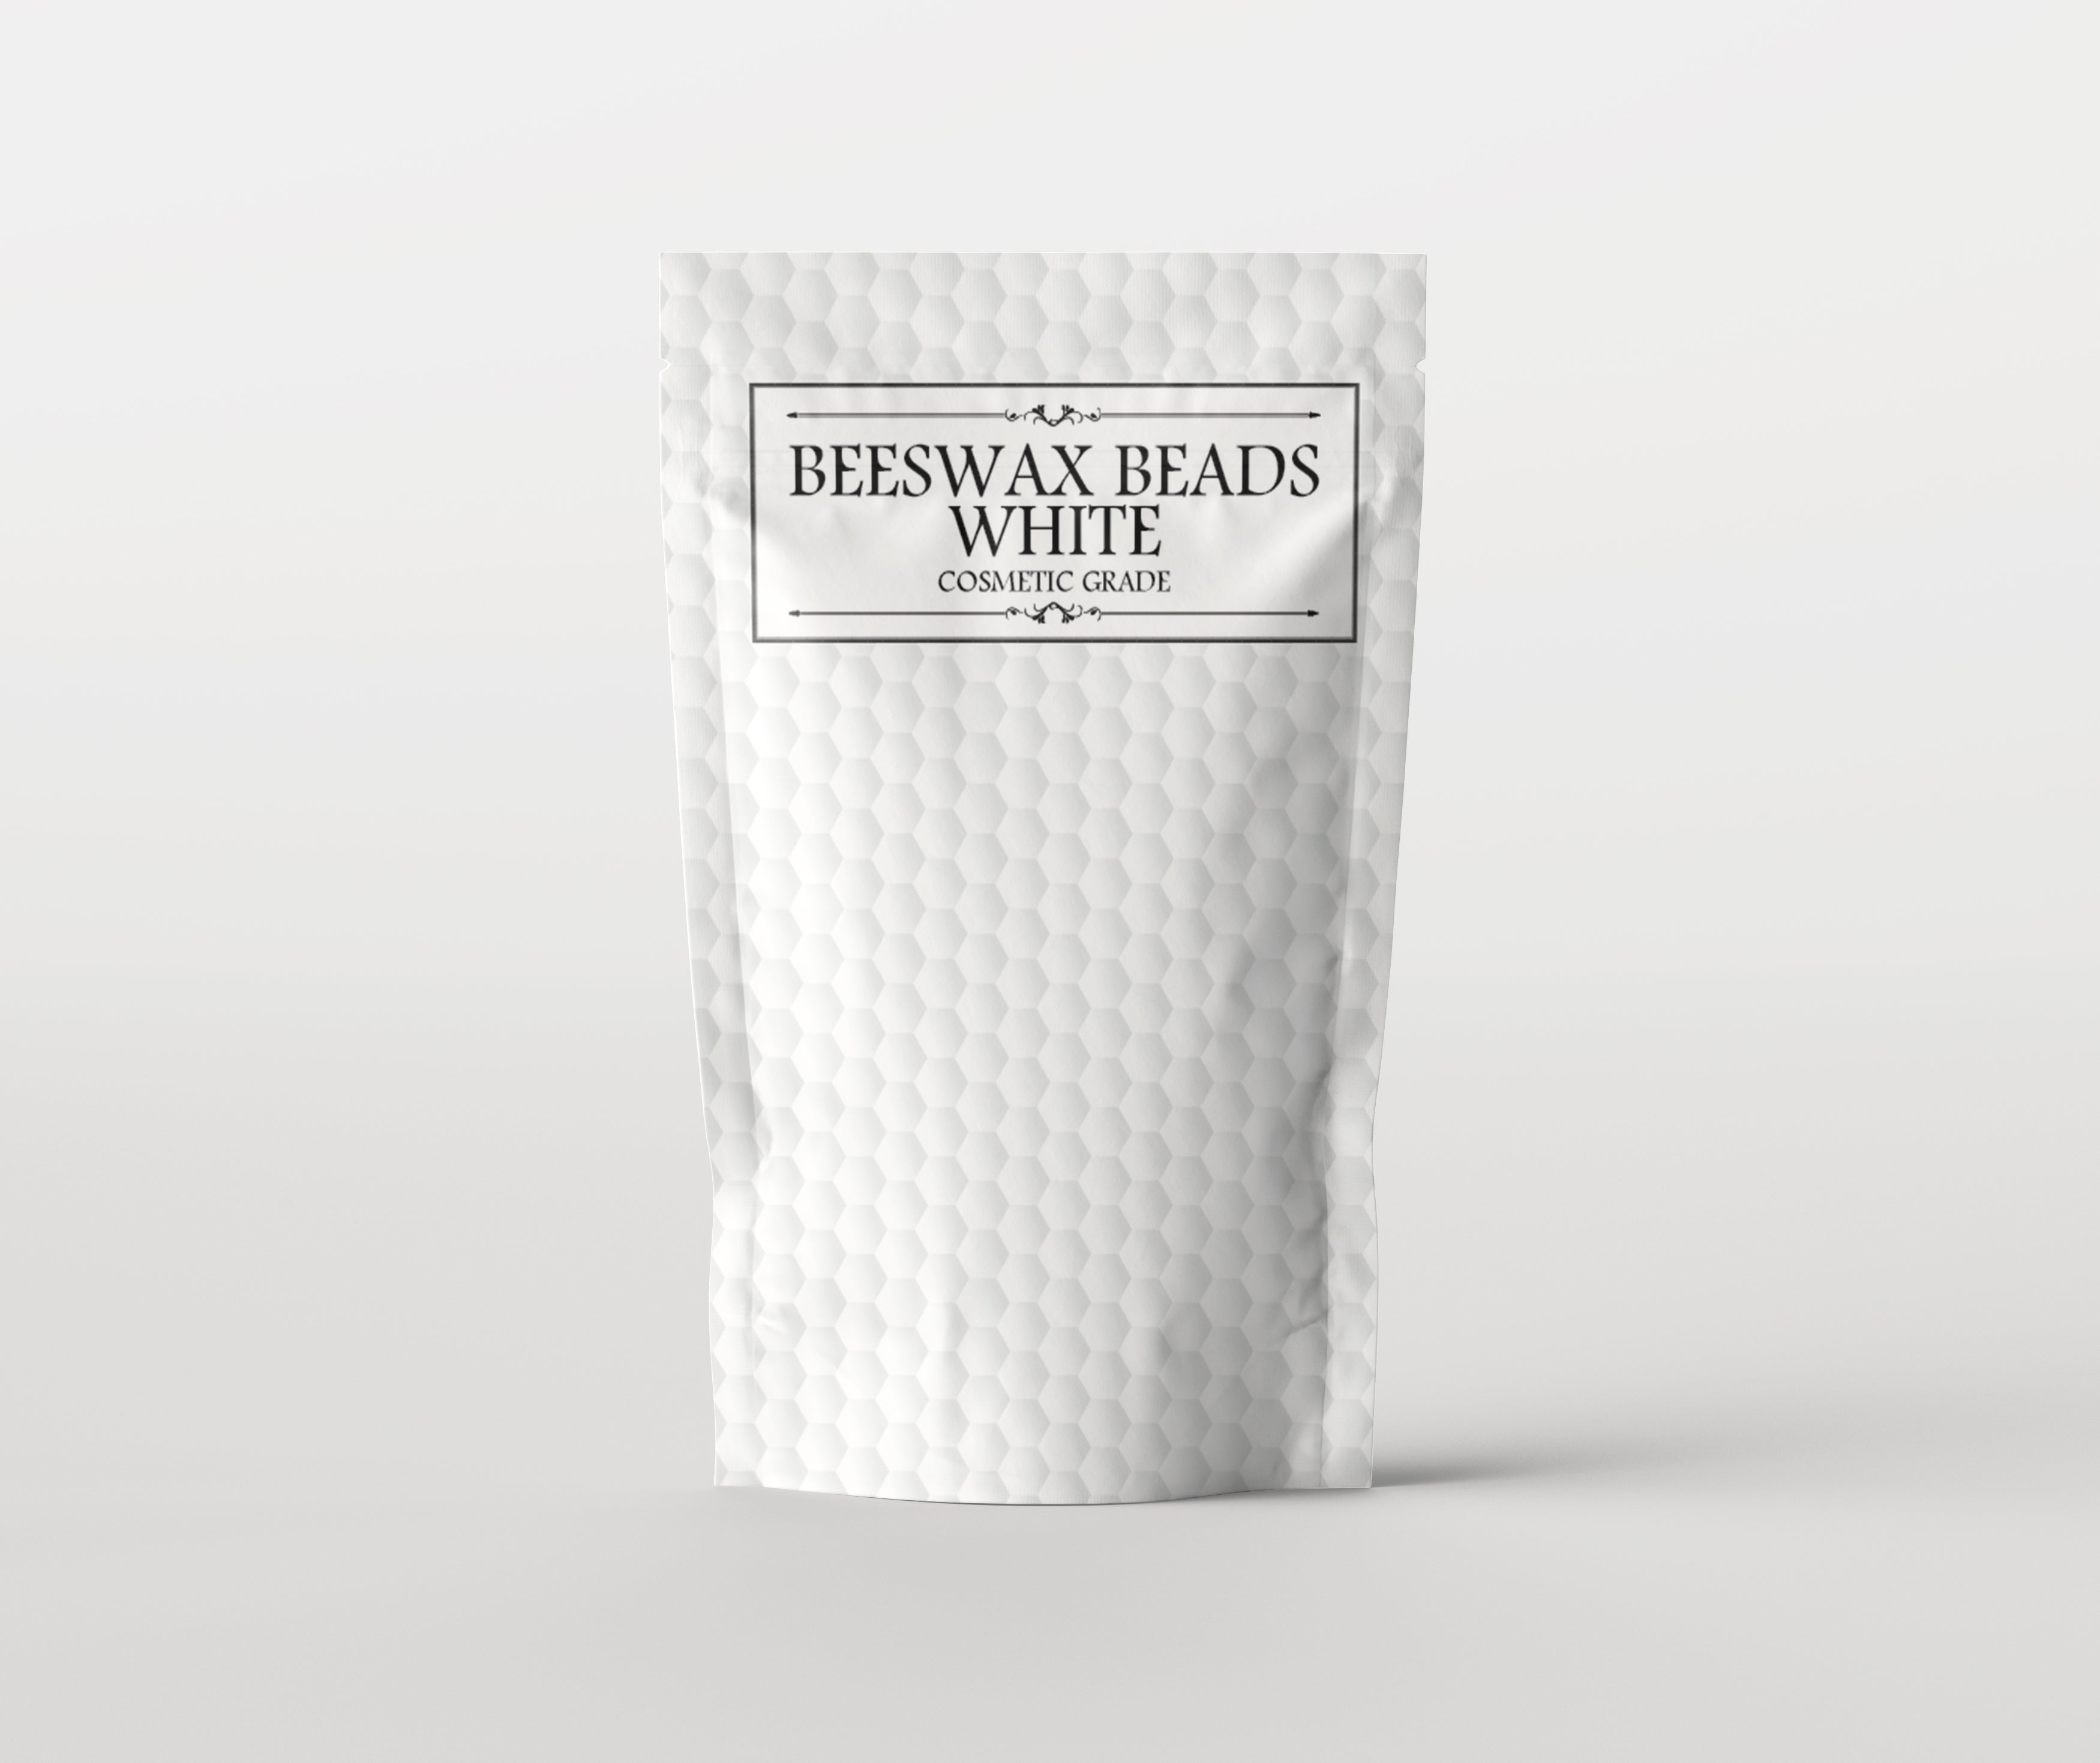 Beeswax Beads White Cosmetic Grade - Cosmetic Waxes